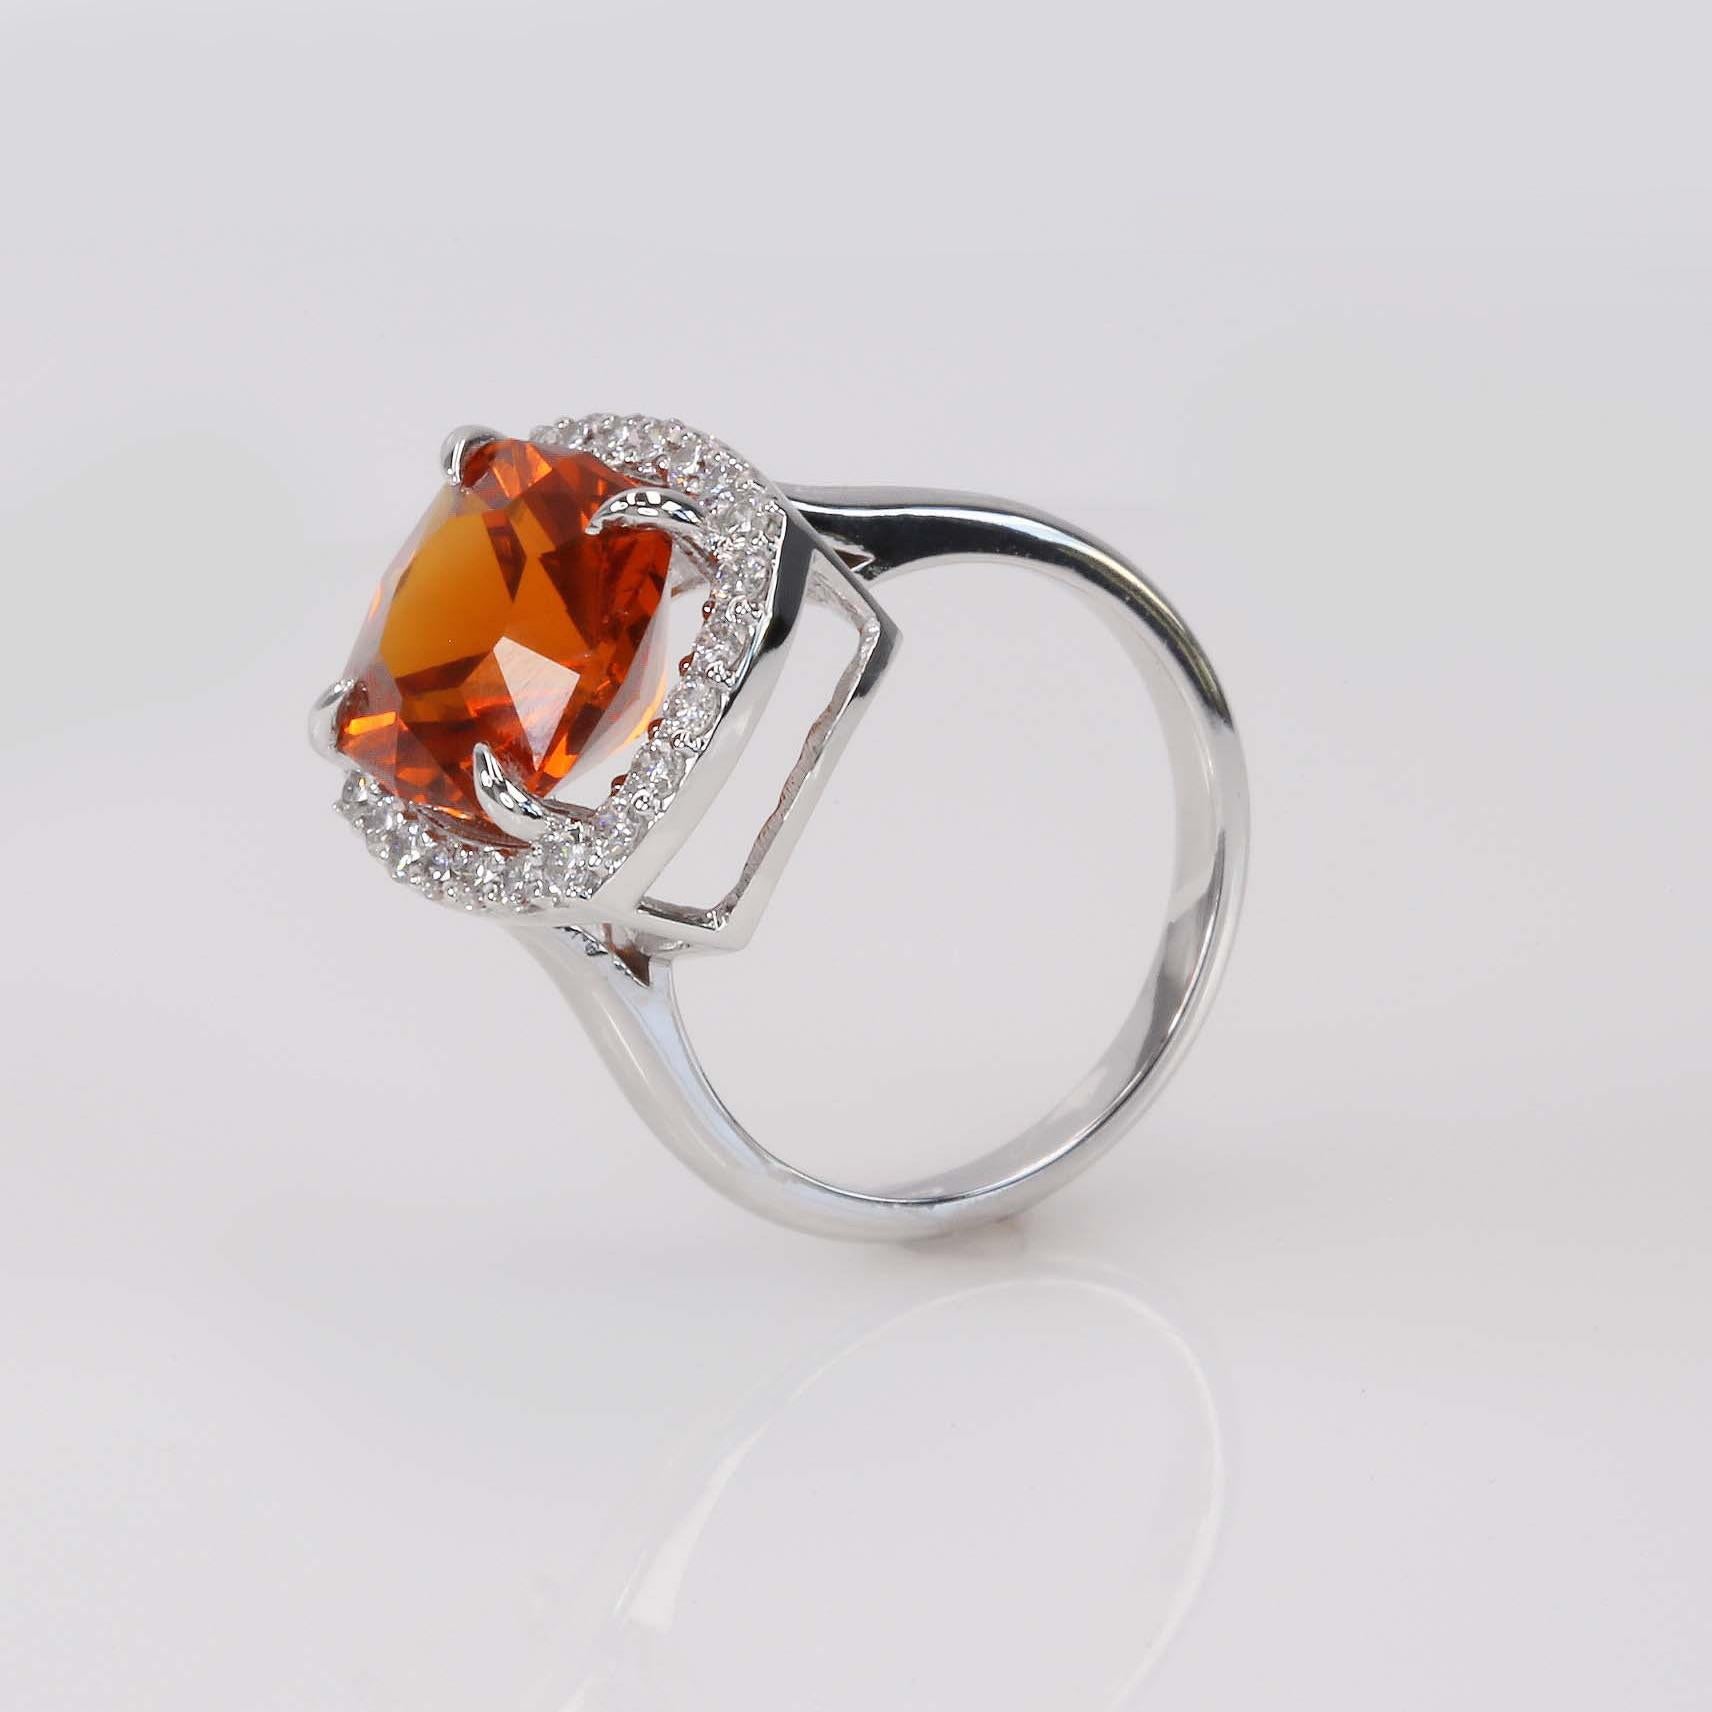 Mandarin Garnet & Diamond Halo Ring

Creator: Carson Gray Jewels	
Ring Size: 6.5
Metal: 18KT White Gold
Stone: Mandarin Garnet and Diamonds
Stone Cut: Radiant Brilliant
Weight: Garnet 6.95 carats; 0.46 carats of diamonds
Style: Statement Ring
Place